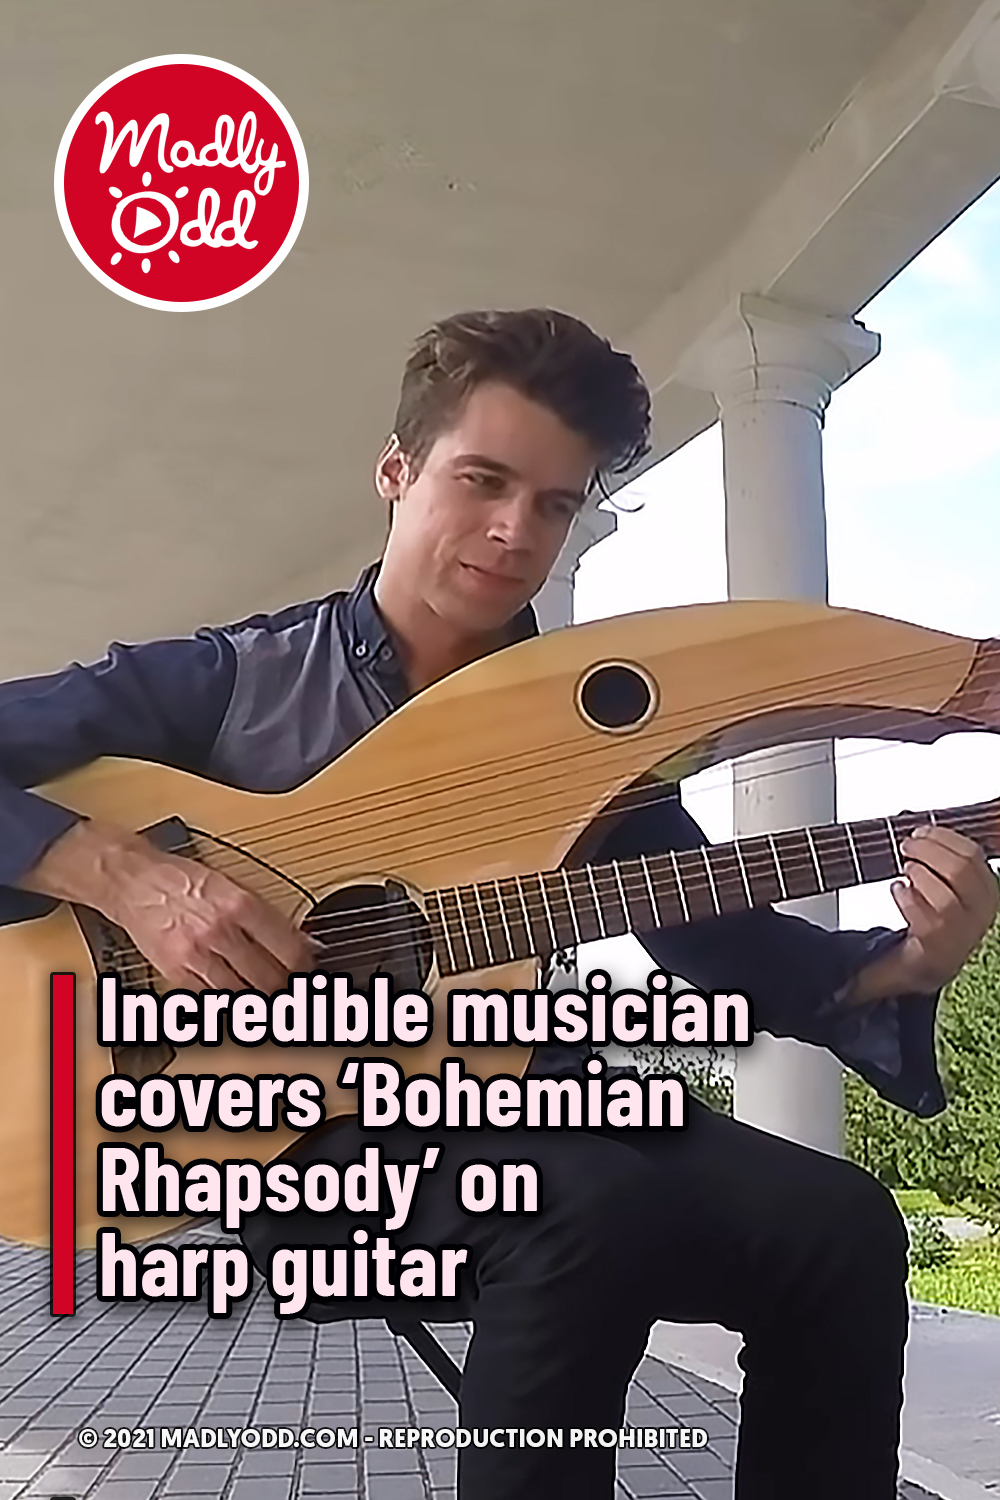 Incredible musician covers ‘Bohemian Rhapsody’ on harp guitar